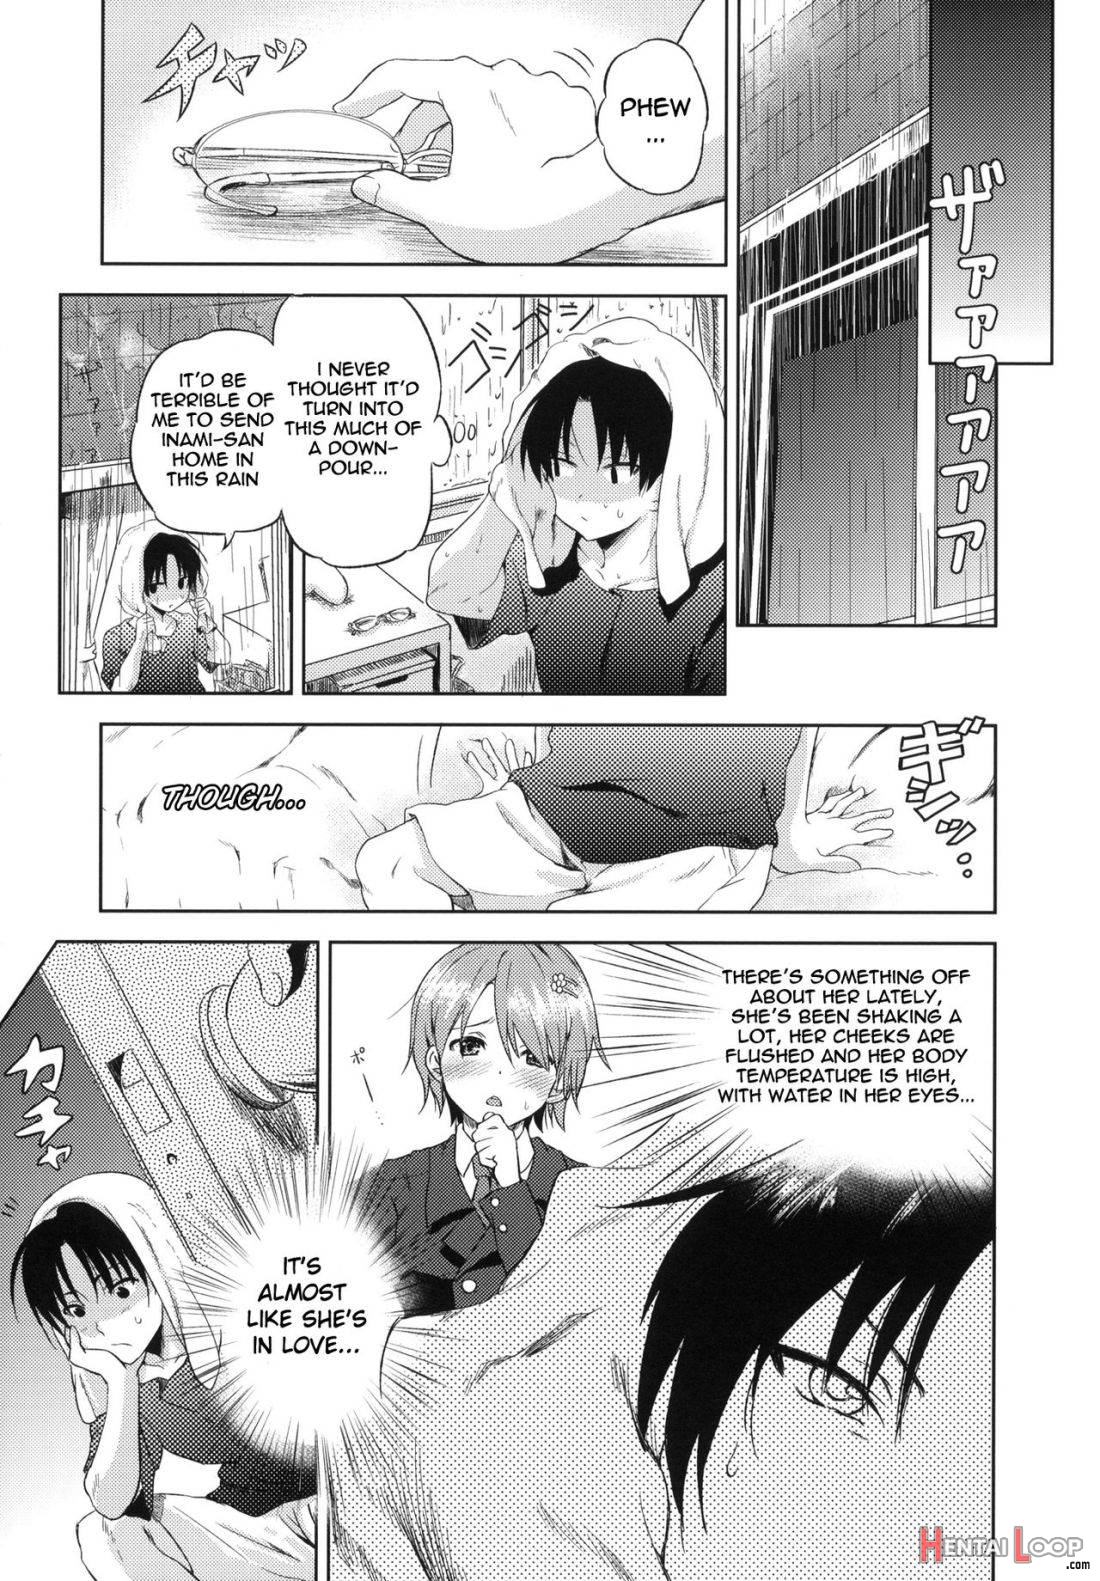 Otomari Mahiru-san! page 6